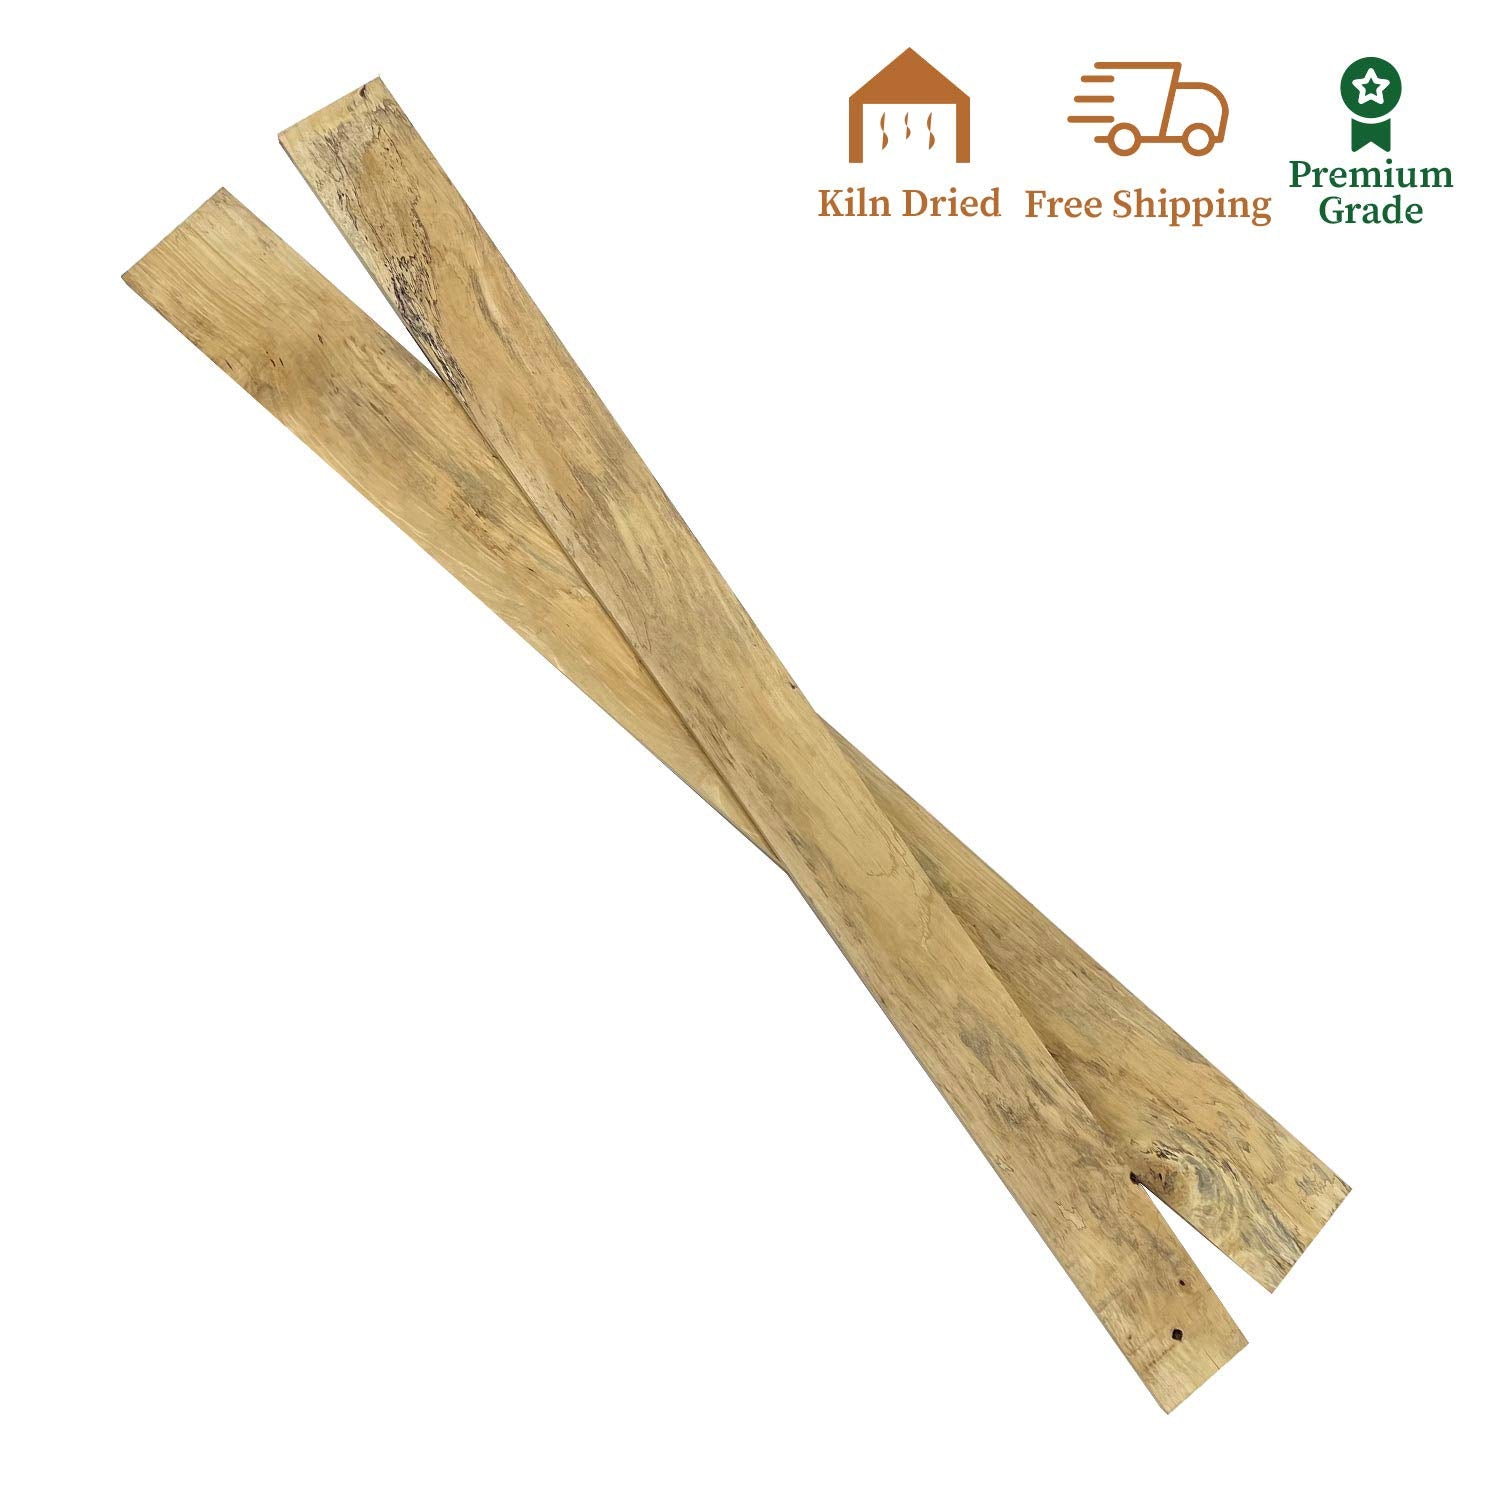 Premium Spalted Tamarind 4/4 Lumber - Exotic Wood Zone - Buy online Across USA 